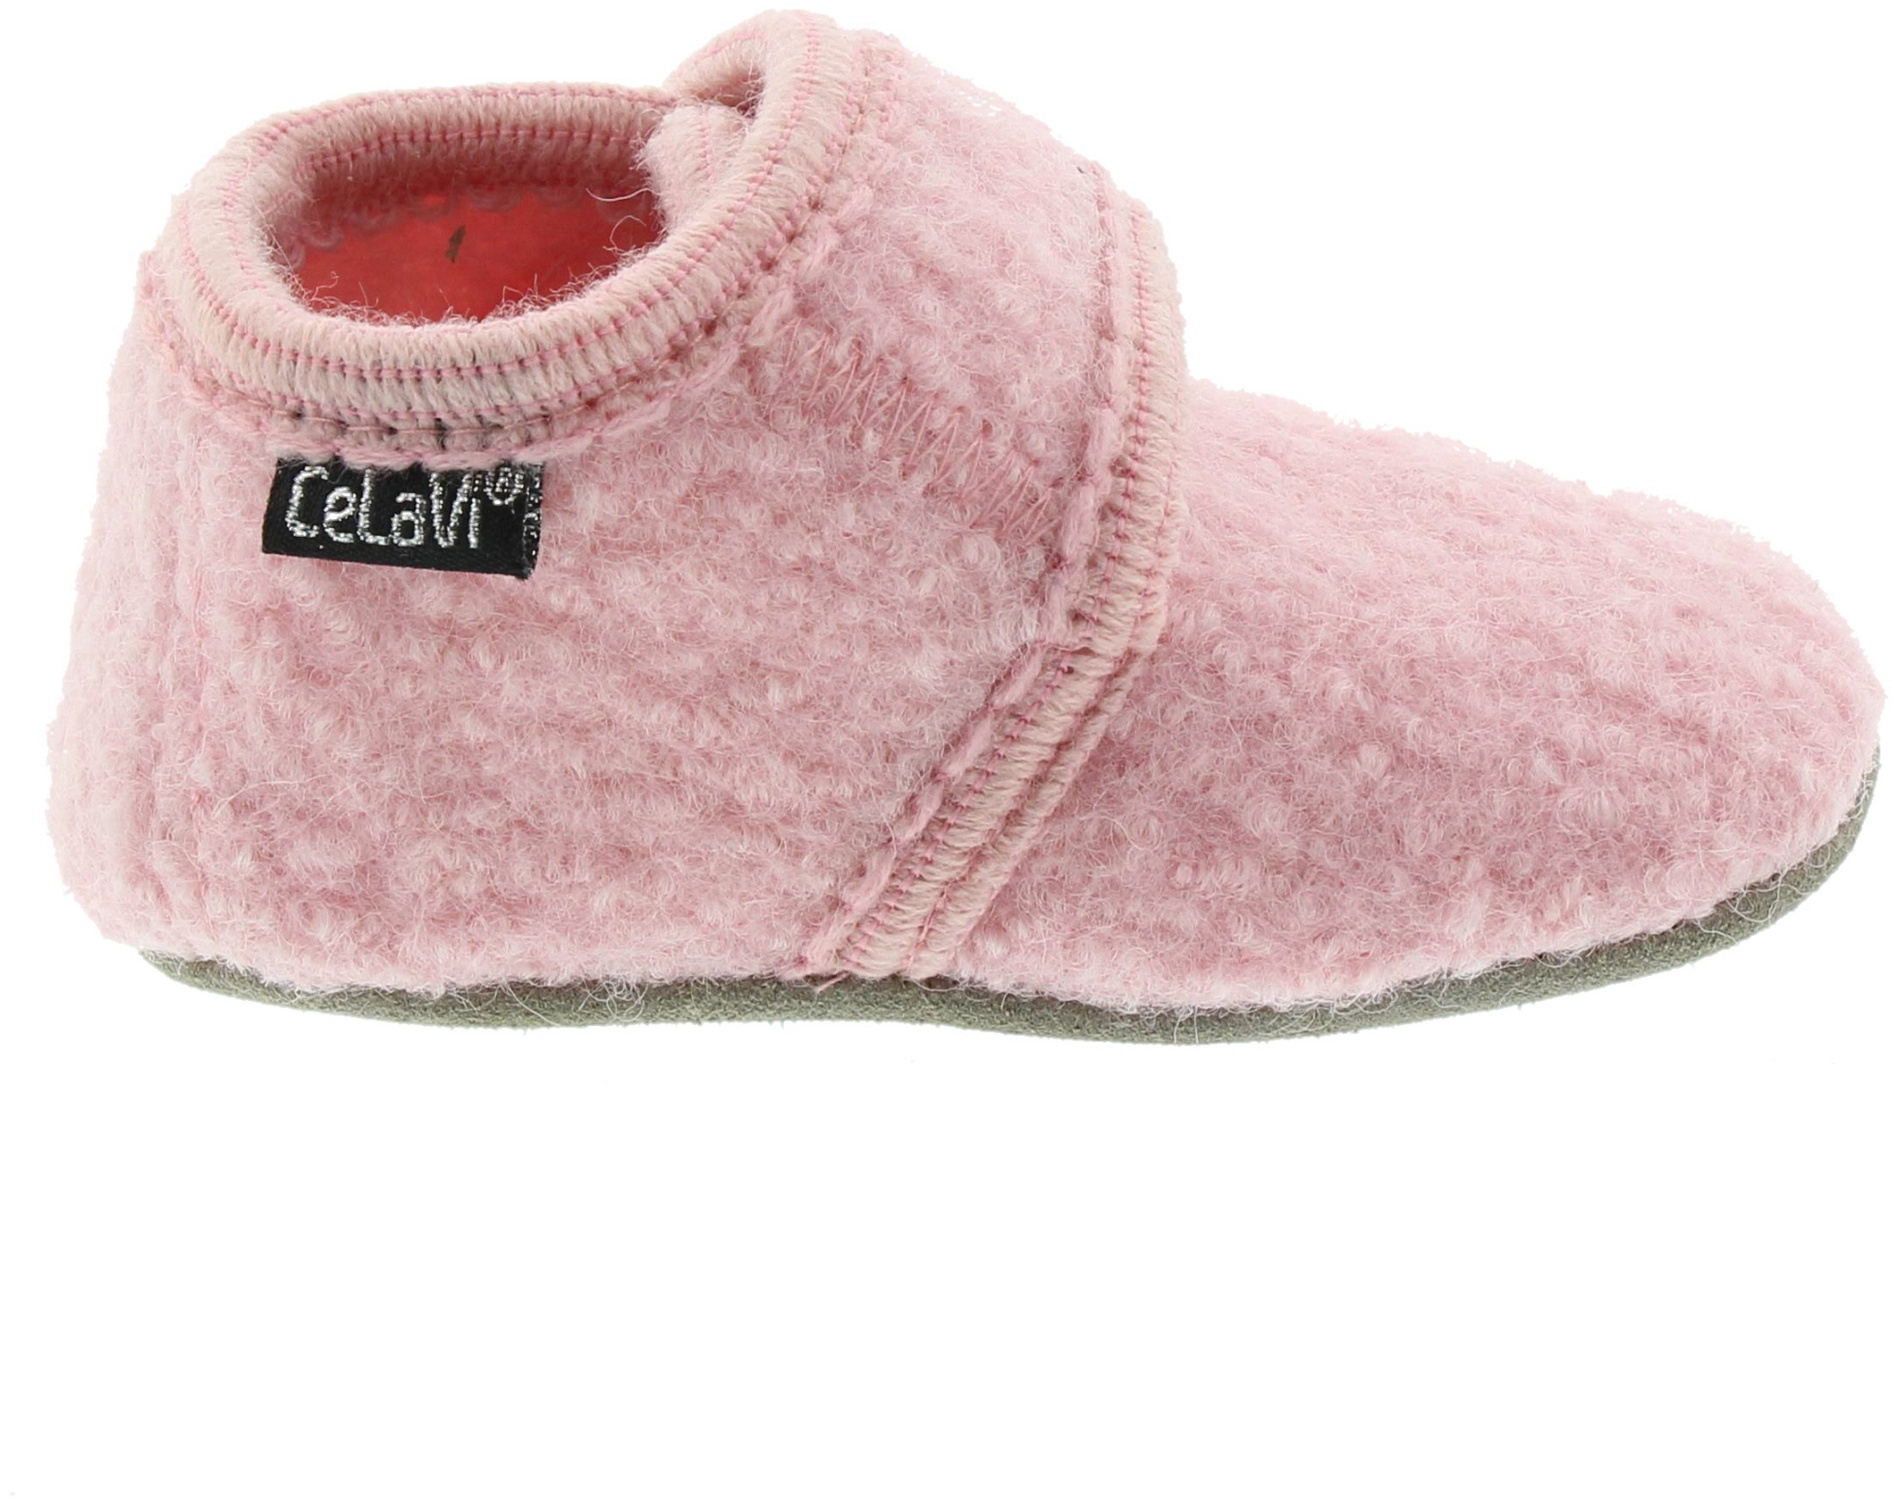 Baby Schuhe Baby Wool Slippers Rose Melange Celavi Kinder